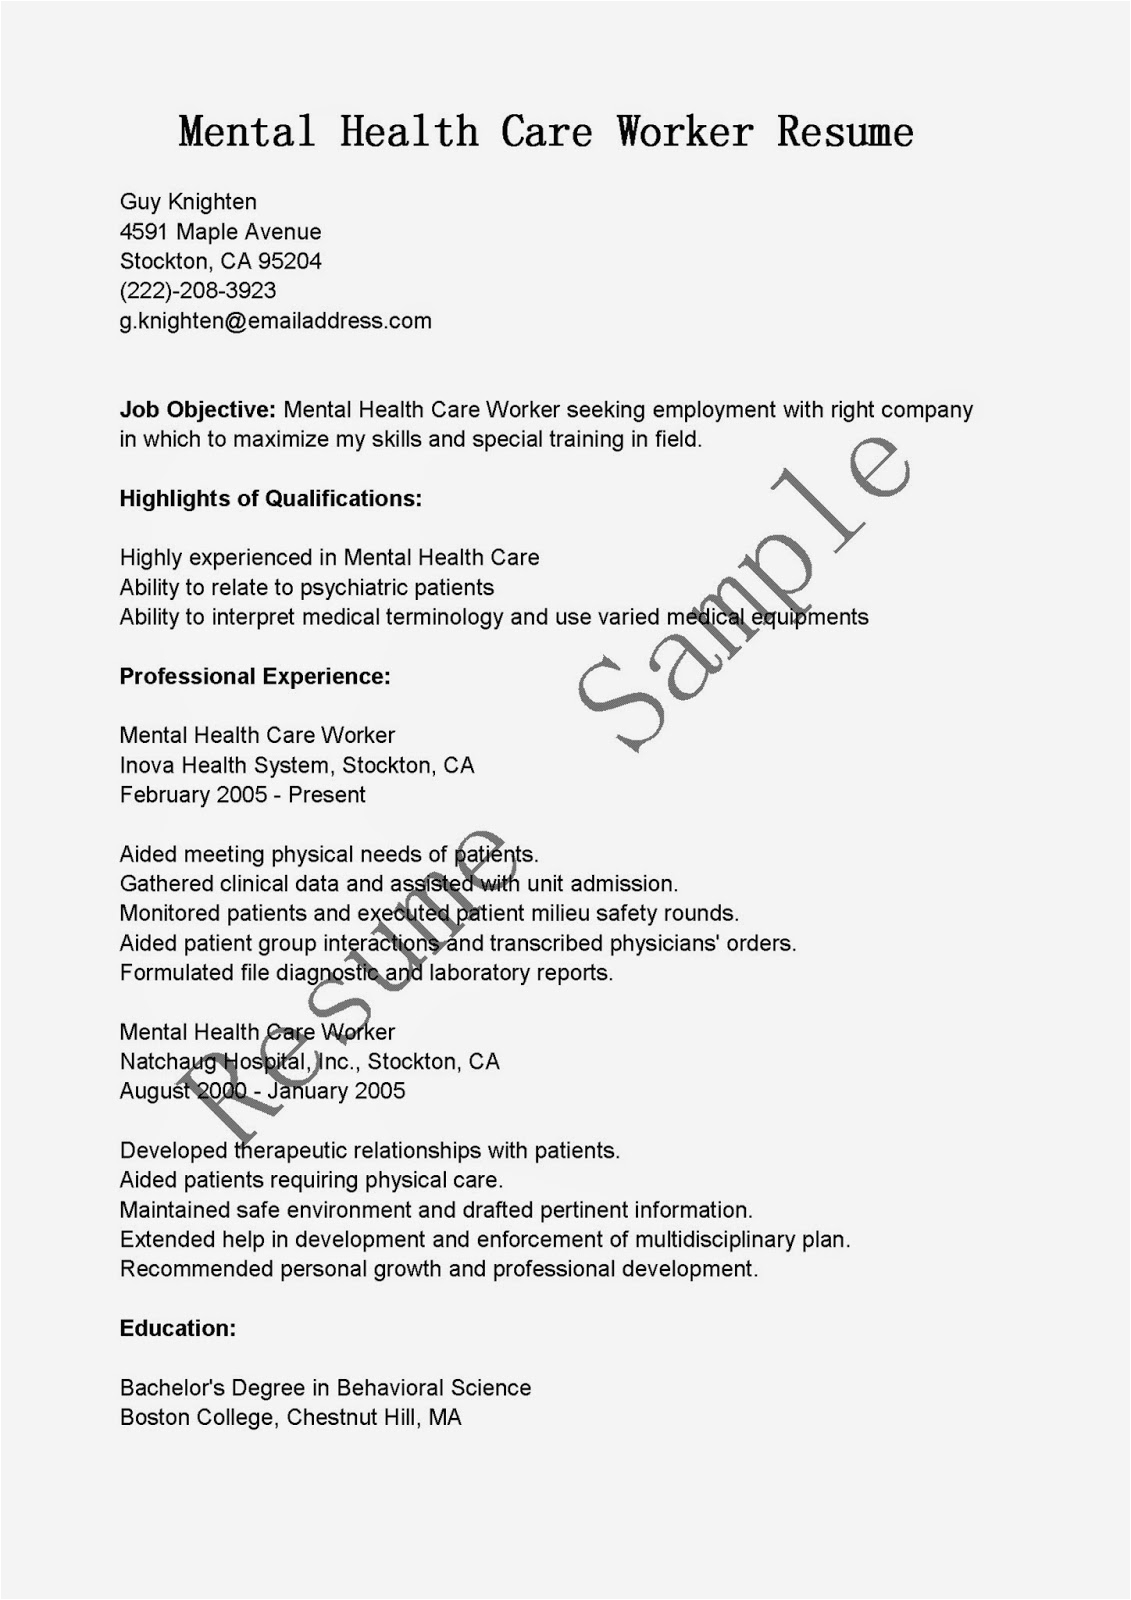 Entry Level Mental Health Worker Resume Sample Resume Samples Mental Health Care Worker Resume Sample